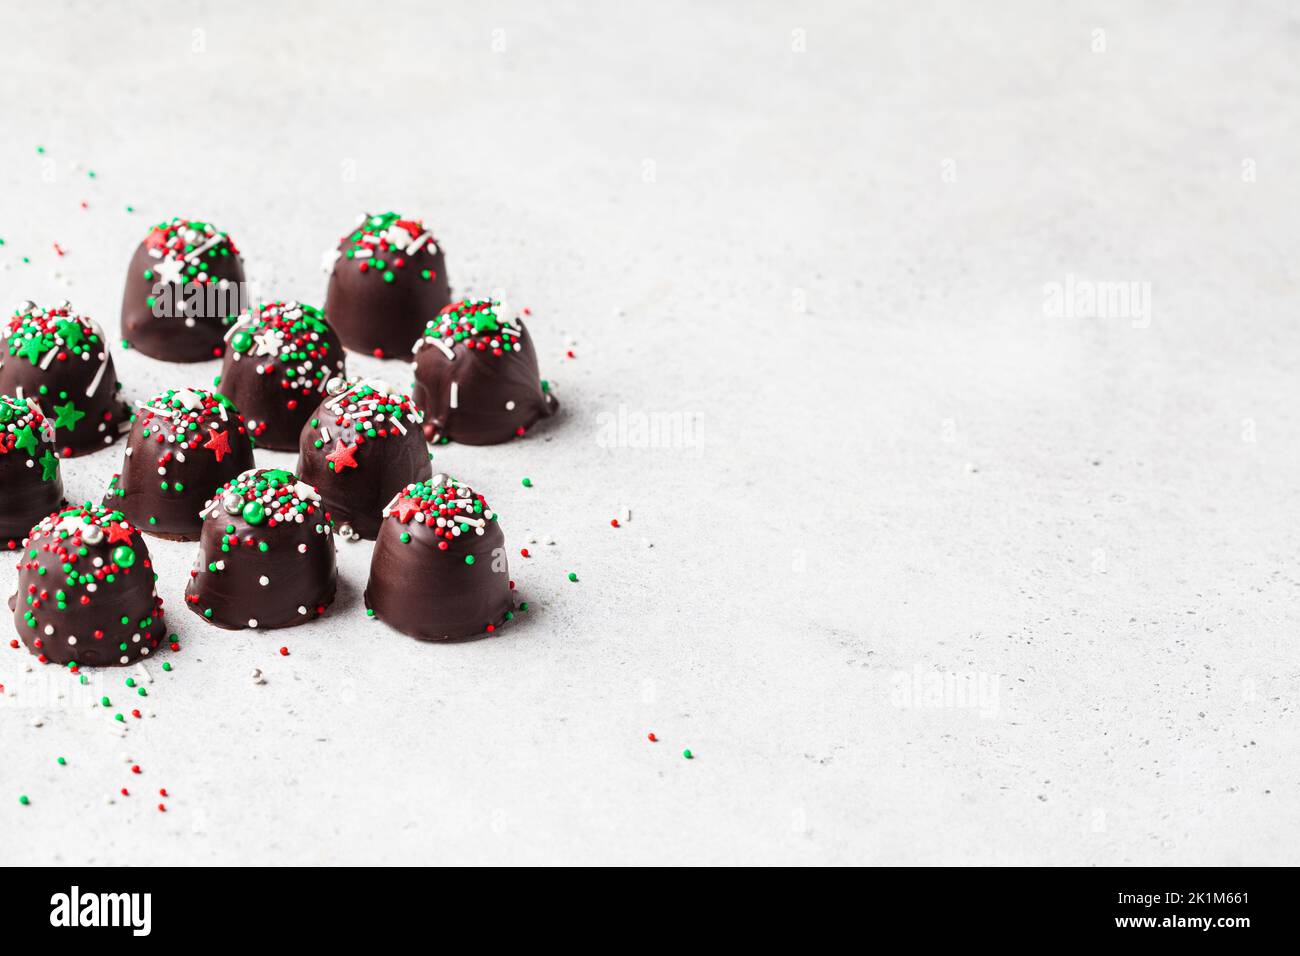 Christmas handmade chocolate balls with holiday sprinkles. DIY holiday gift, dessert recipe. Stock Photo